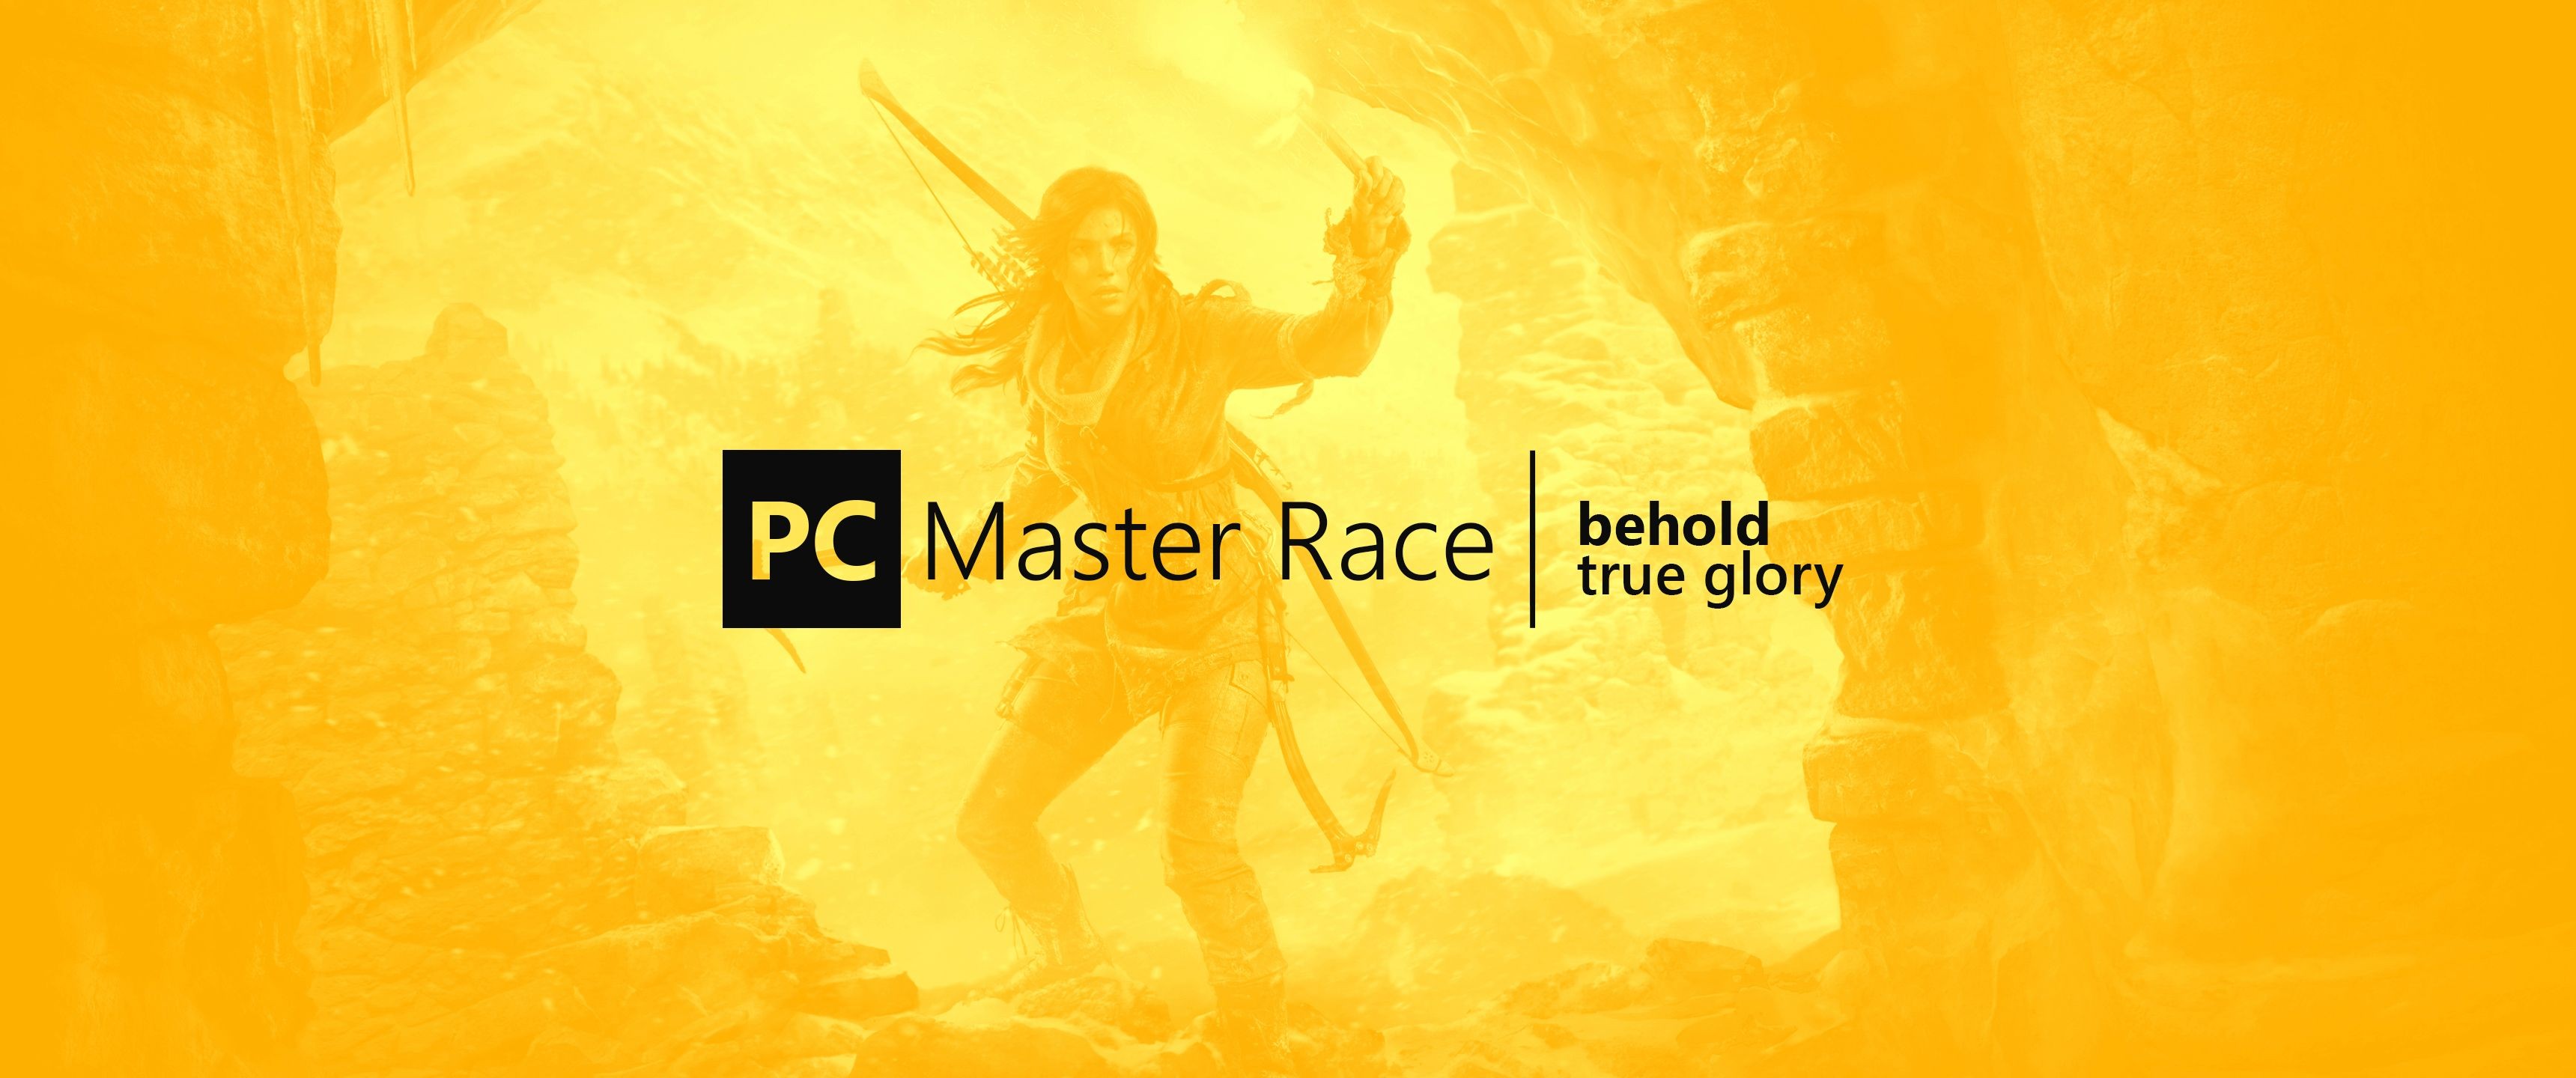 General 3440x1440 PC Master  Race PC gaming Tomb Raider Lara Croft (Tomb Raider) digital art